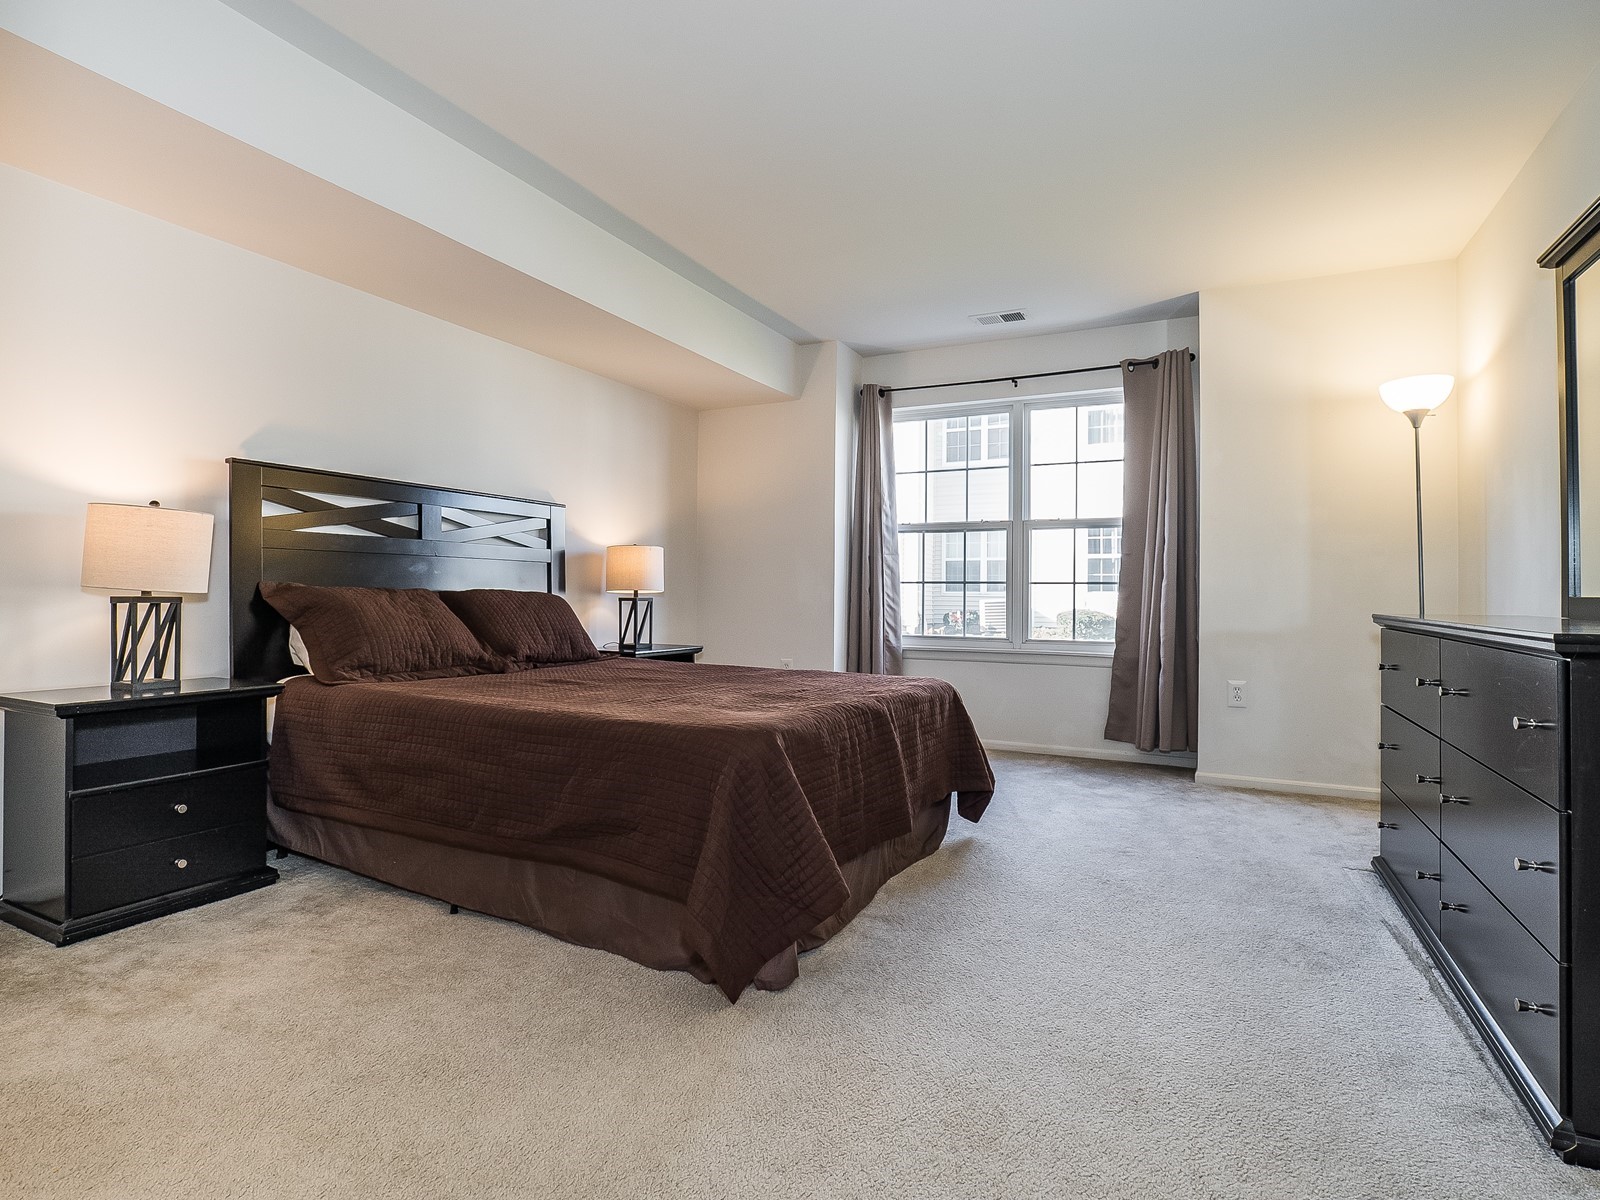 Woodbridge 801 Short Term Housing Master bedroom with large bed, dresser and nightstands